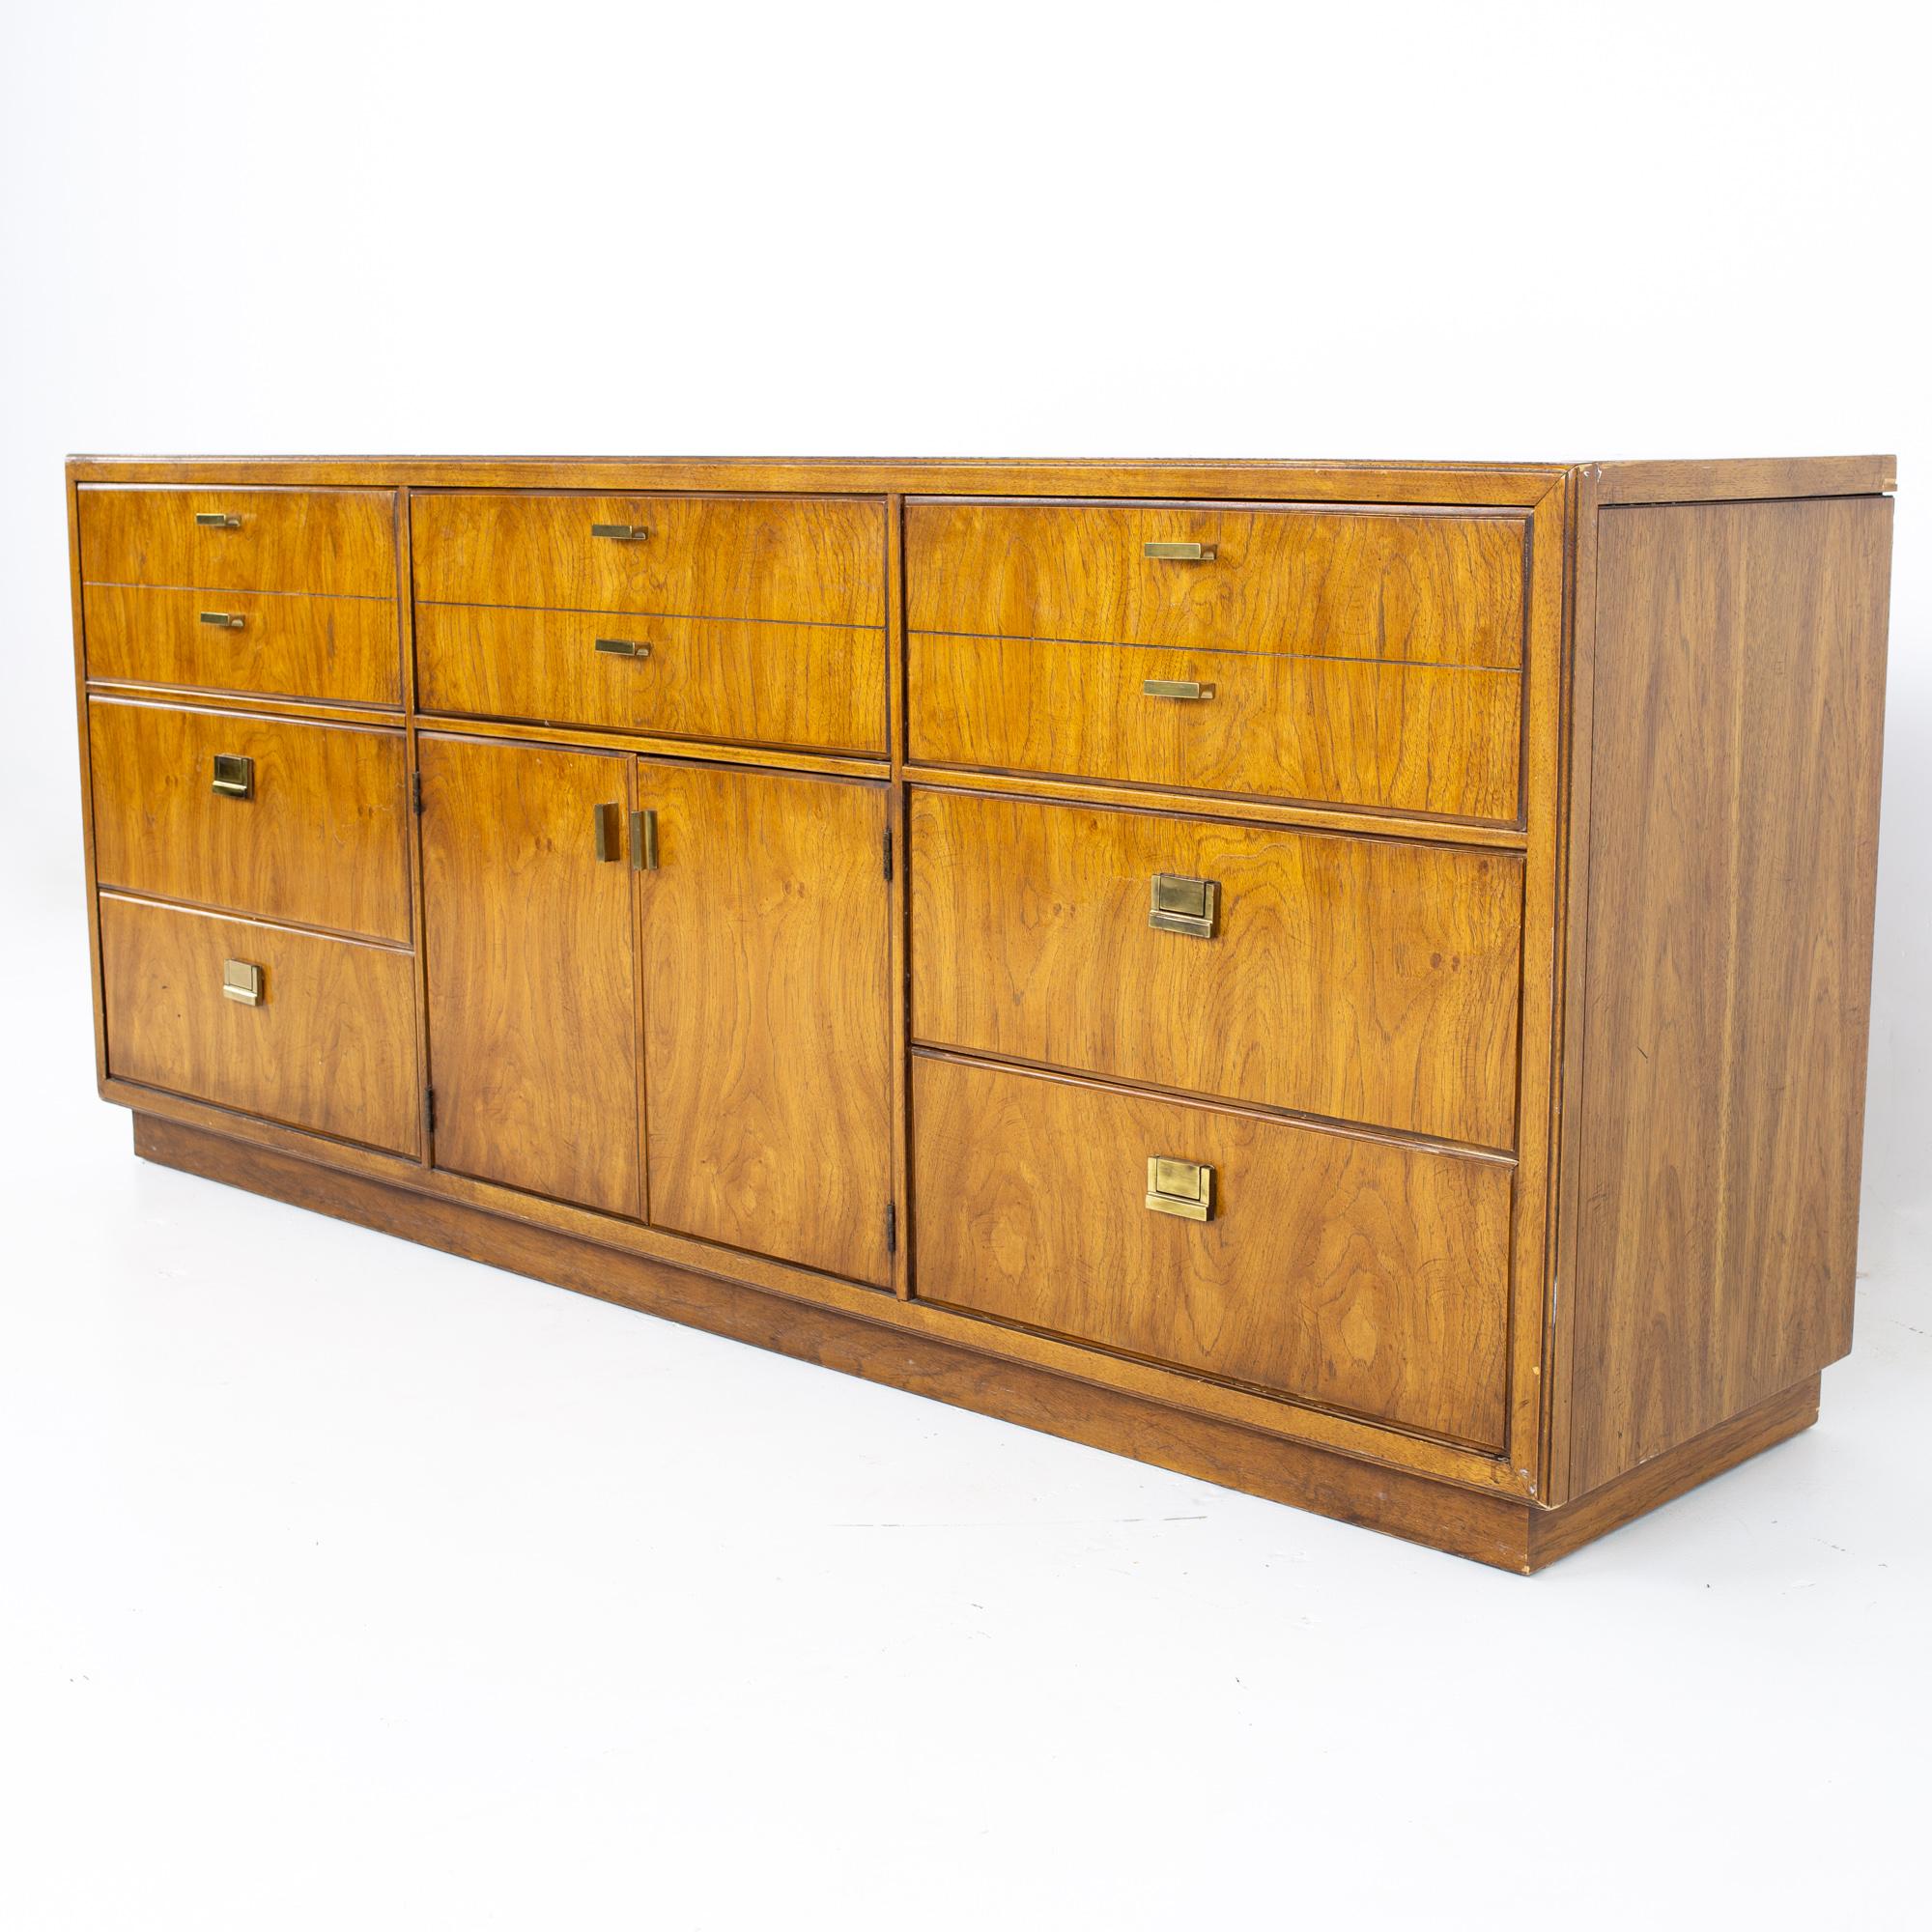 Drexel heritage consensus mid century pecan and brass 9 drawer lowboy dresser.
Dresser measures: 72 wide x 18.75 deep x 30.5 inches high.